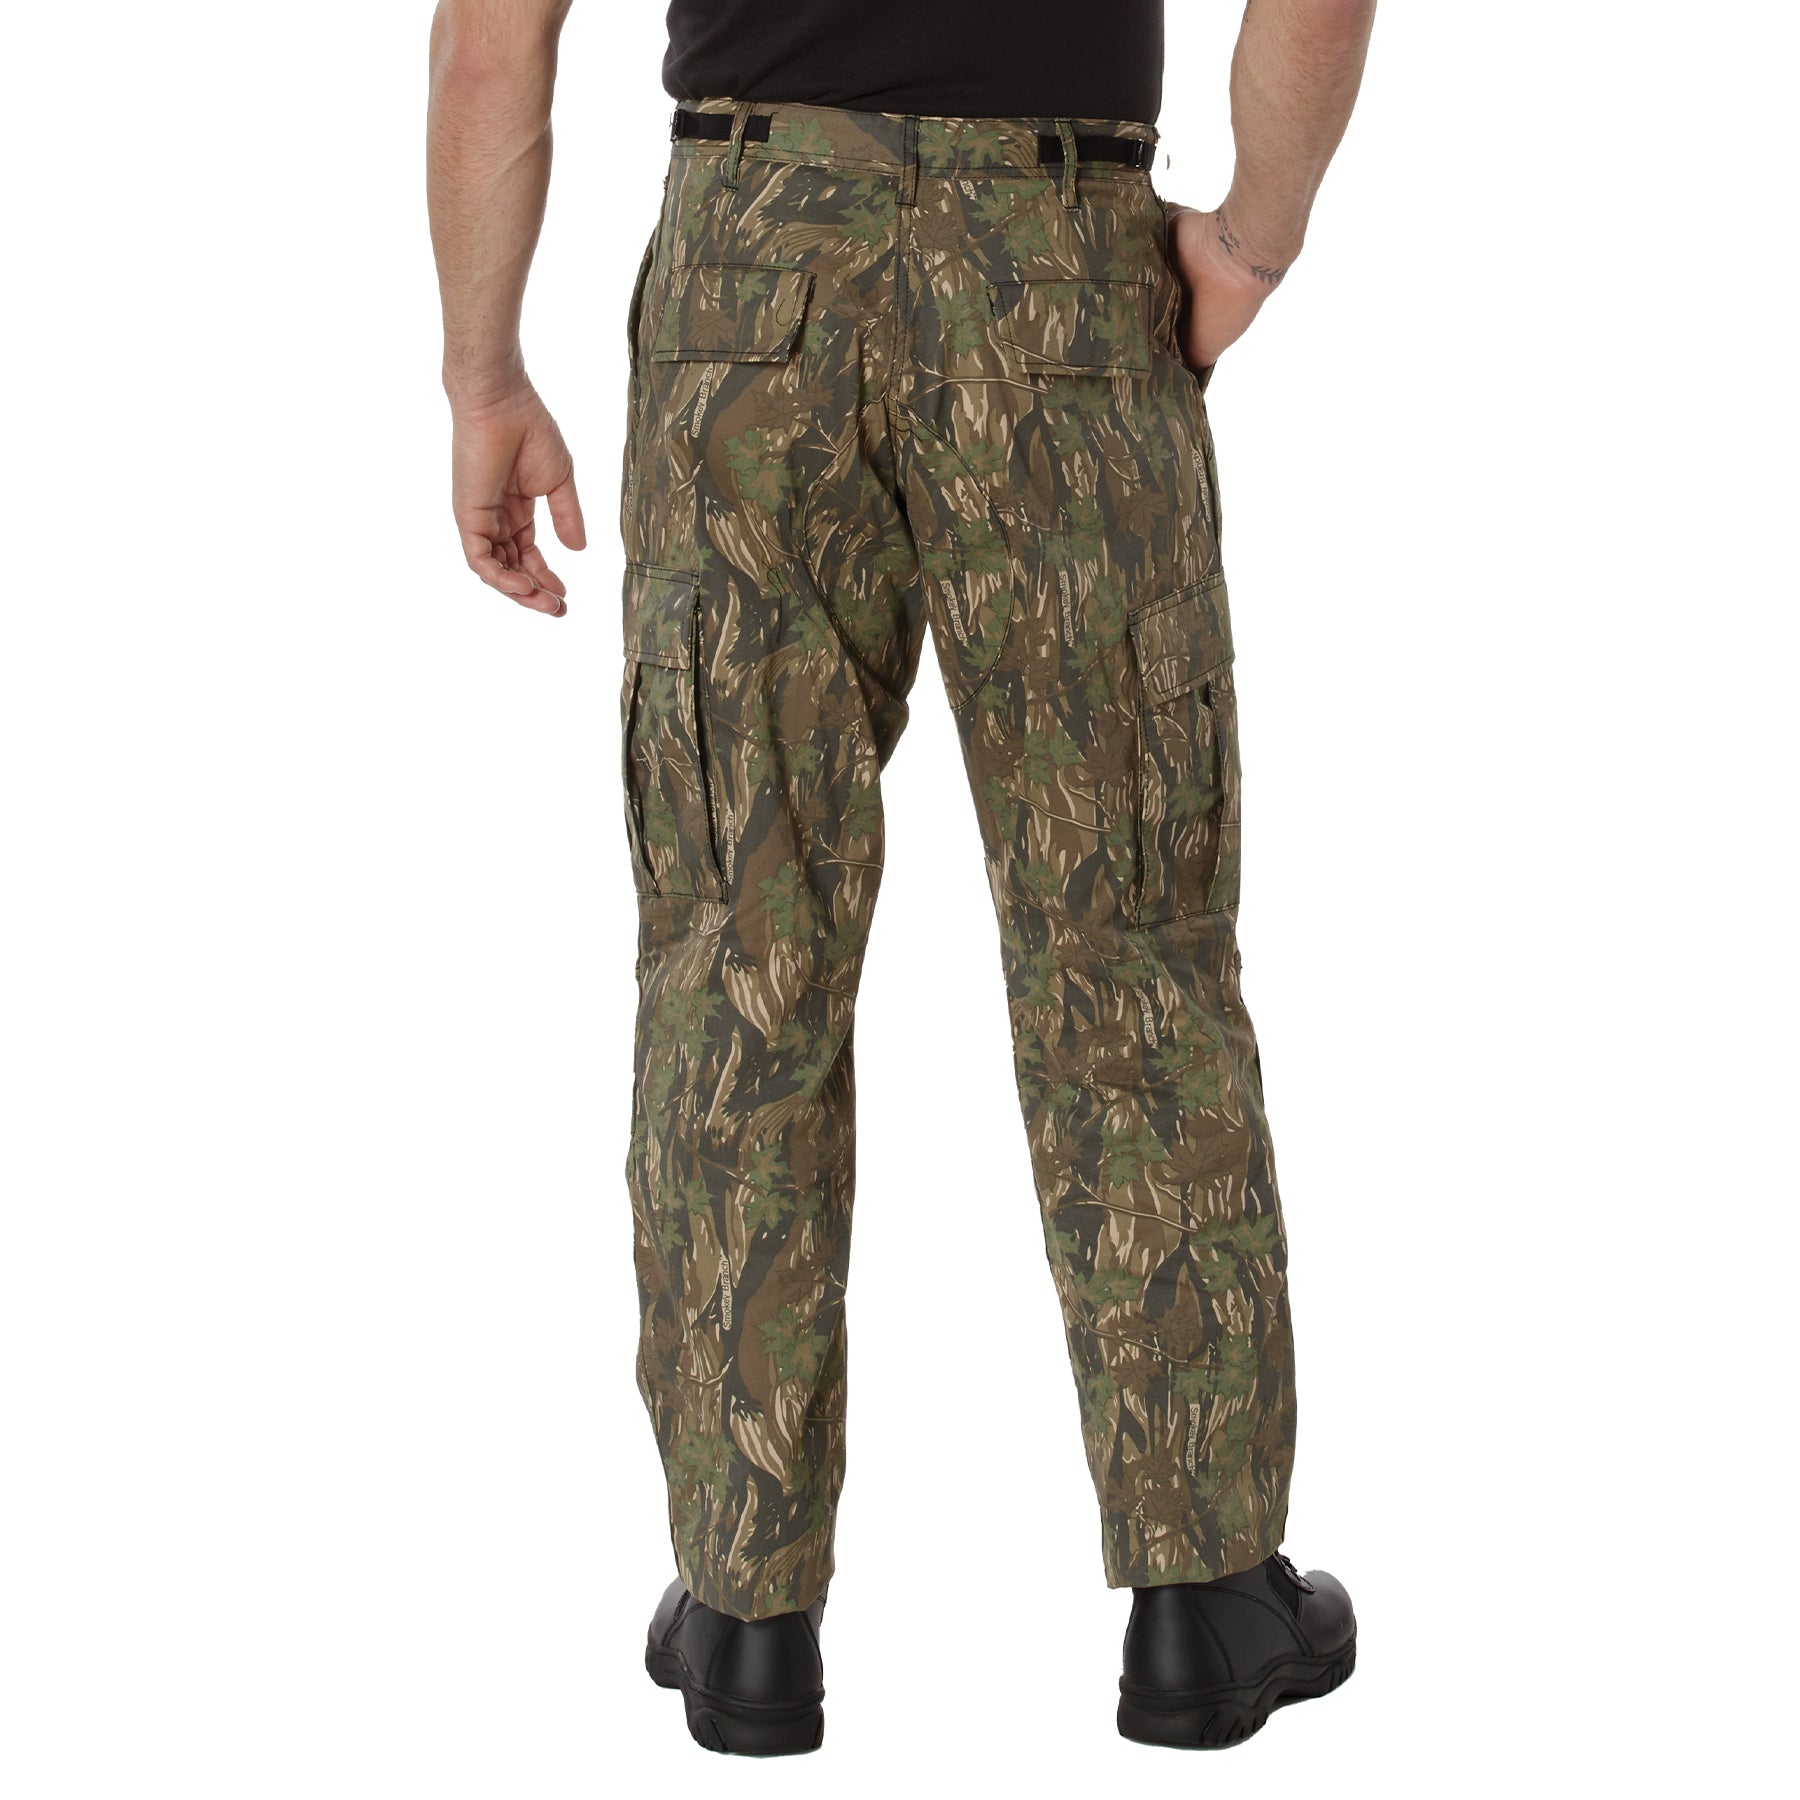 Camo Poly/Cotton Tactical BDU Pants